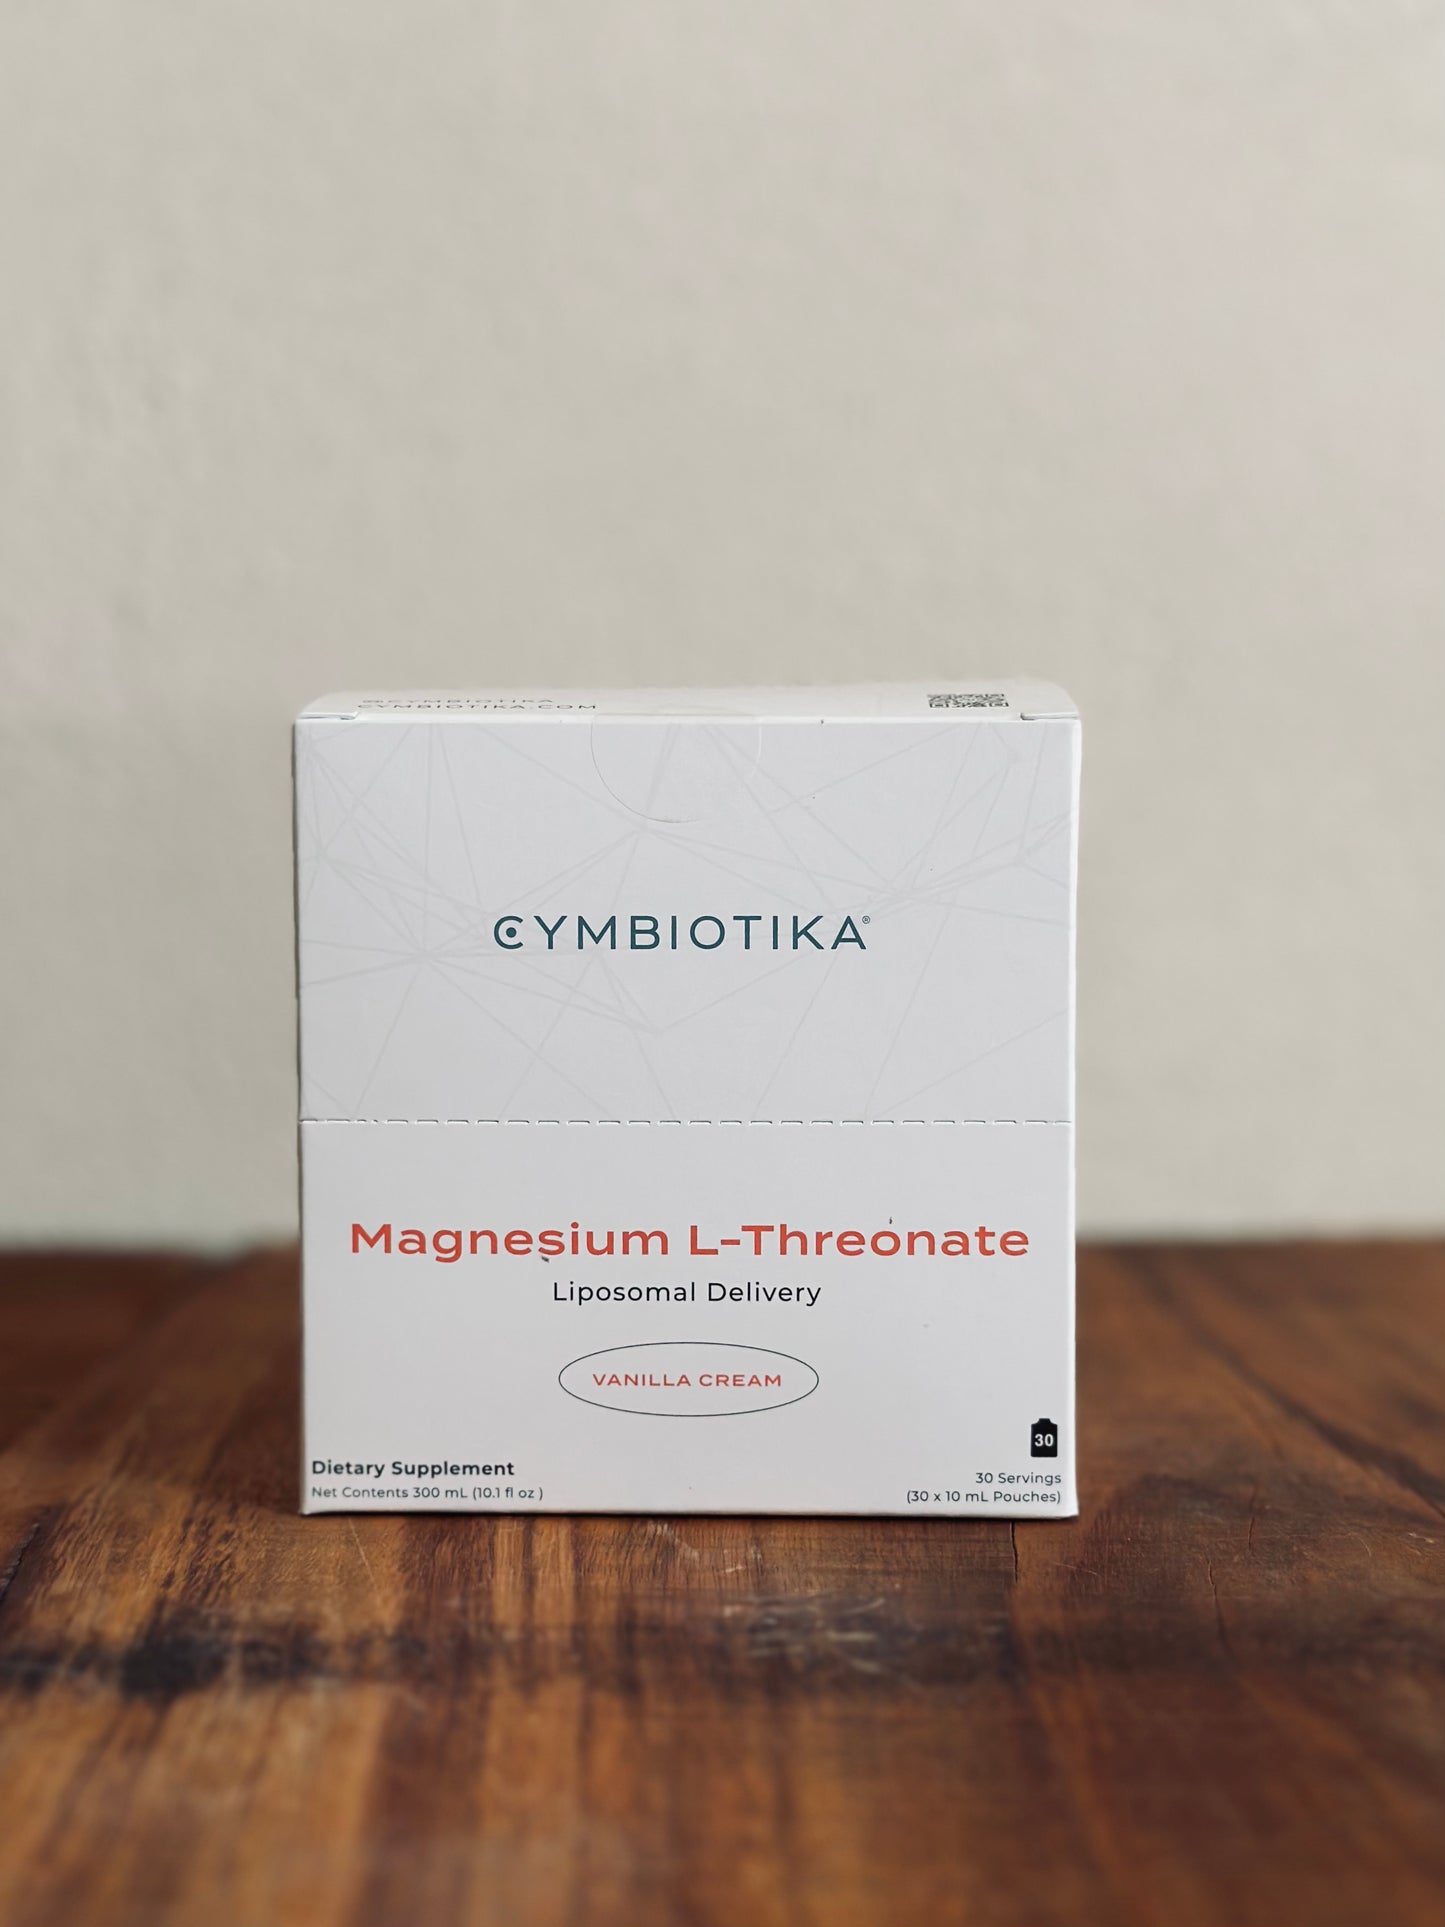 Liposomal Magnesium L-Threonate, Cymbiotika